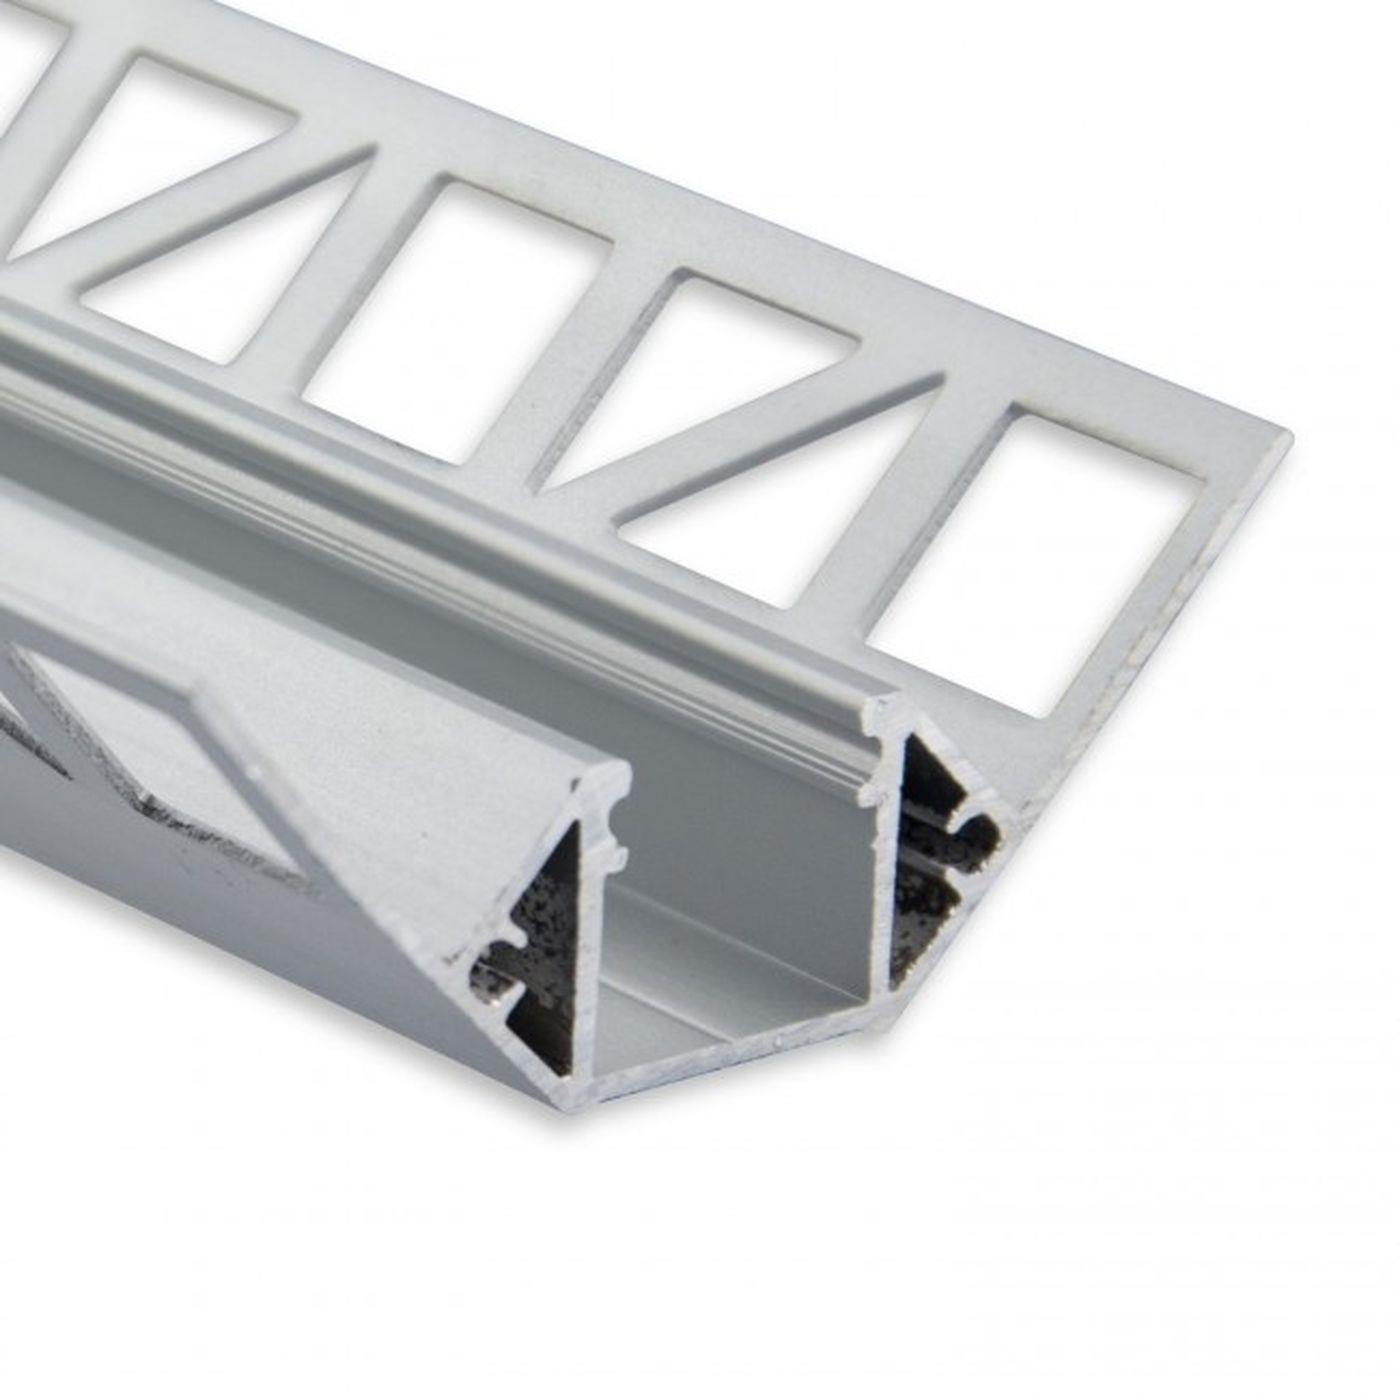 2m LED profile FP8n Silver 32,2x32,2mm Aluminium Tile profile for 12mm LED strips